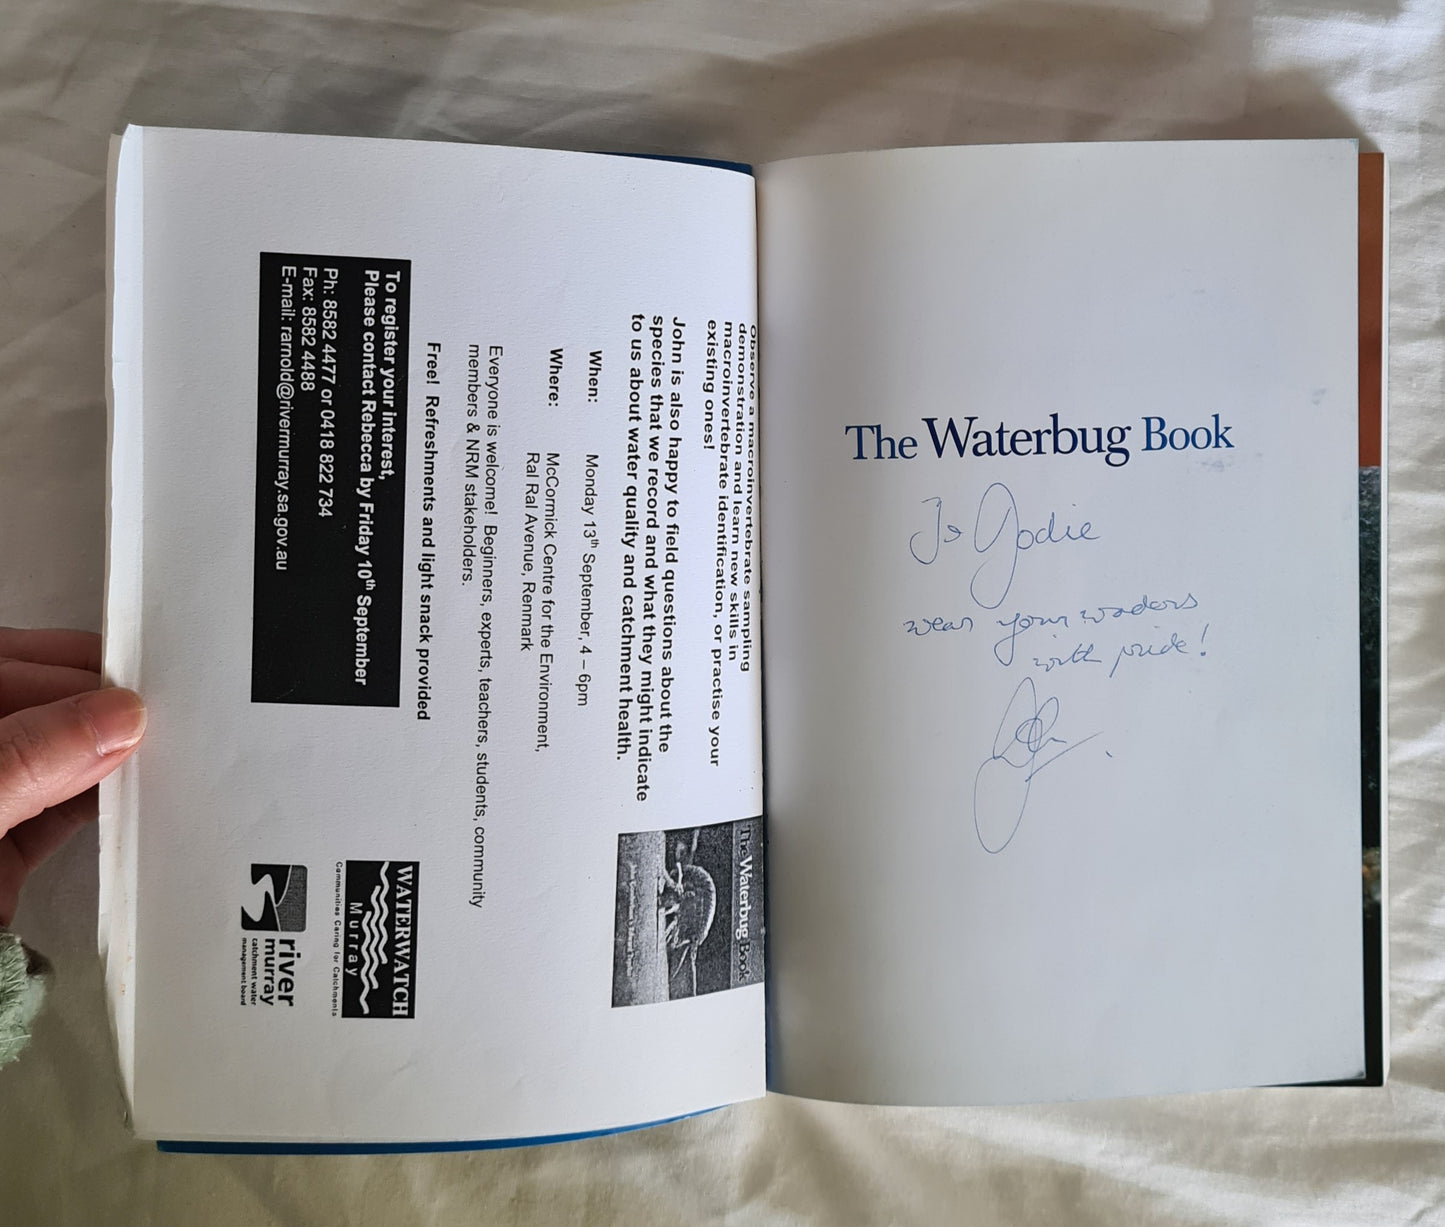 The Waterbug Book by John Gooderham and Edward Tsyrlin